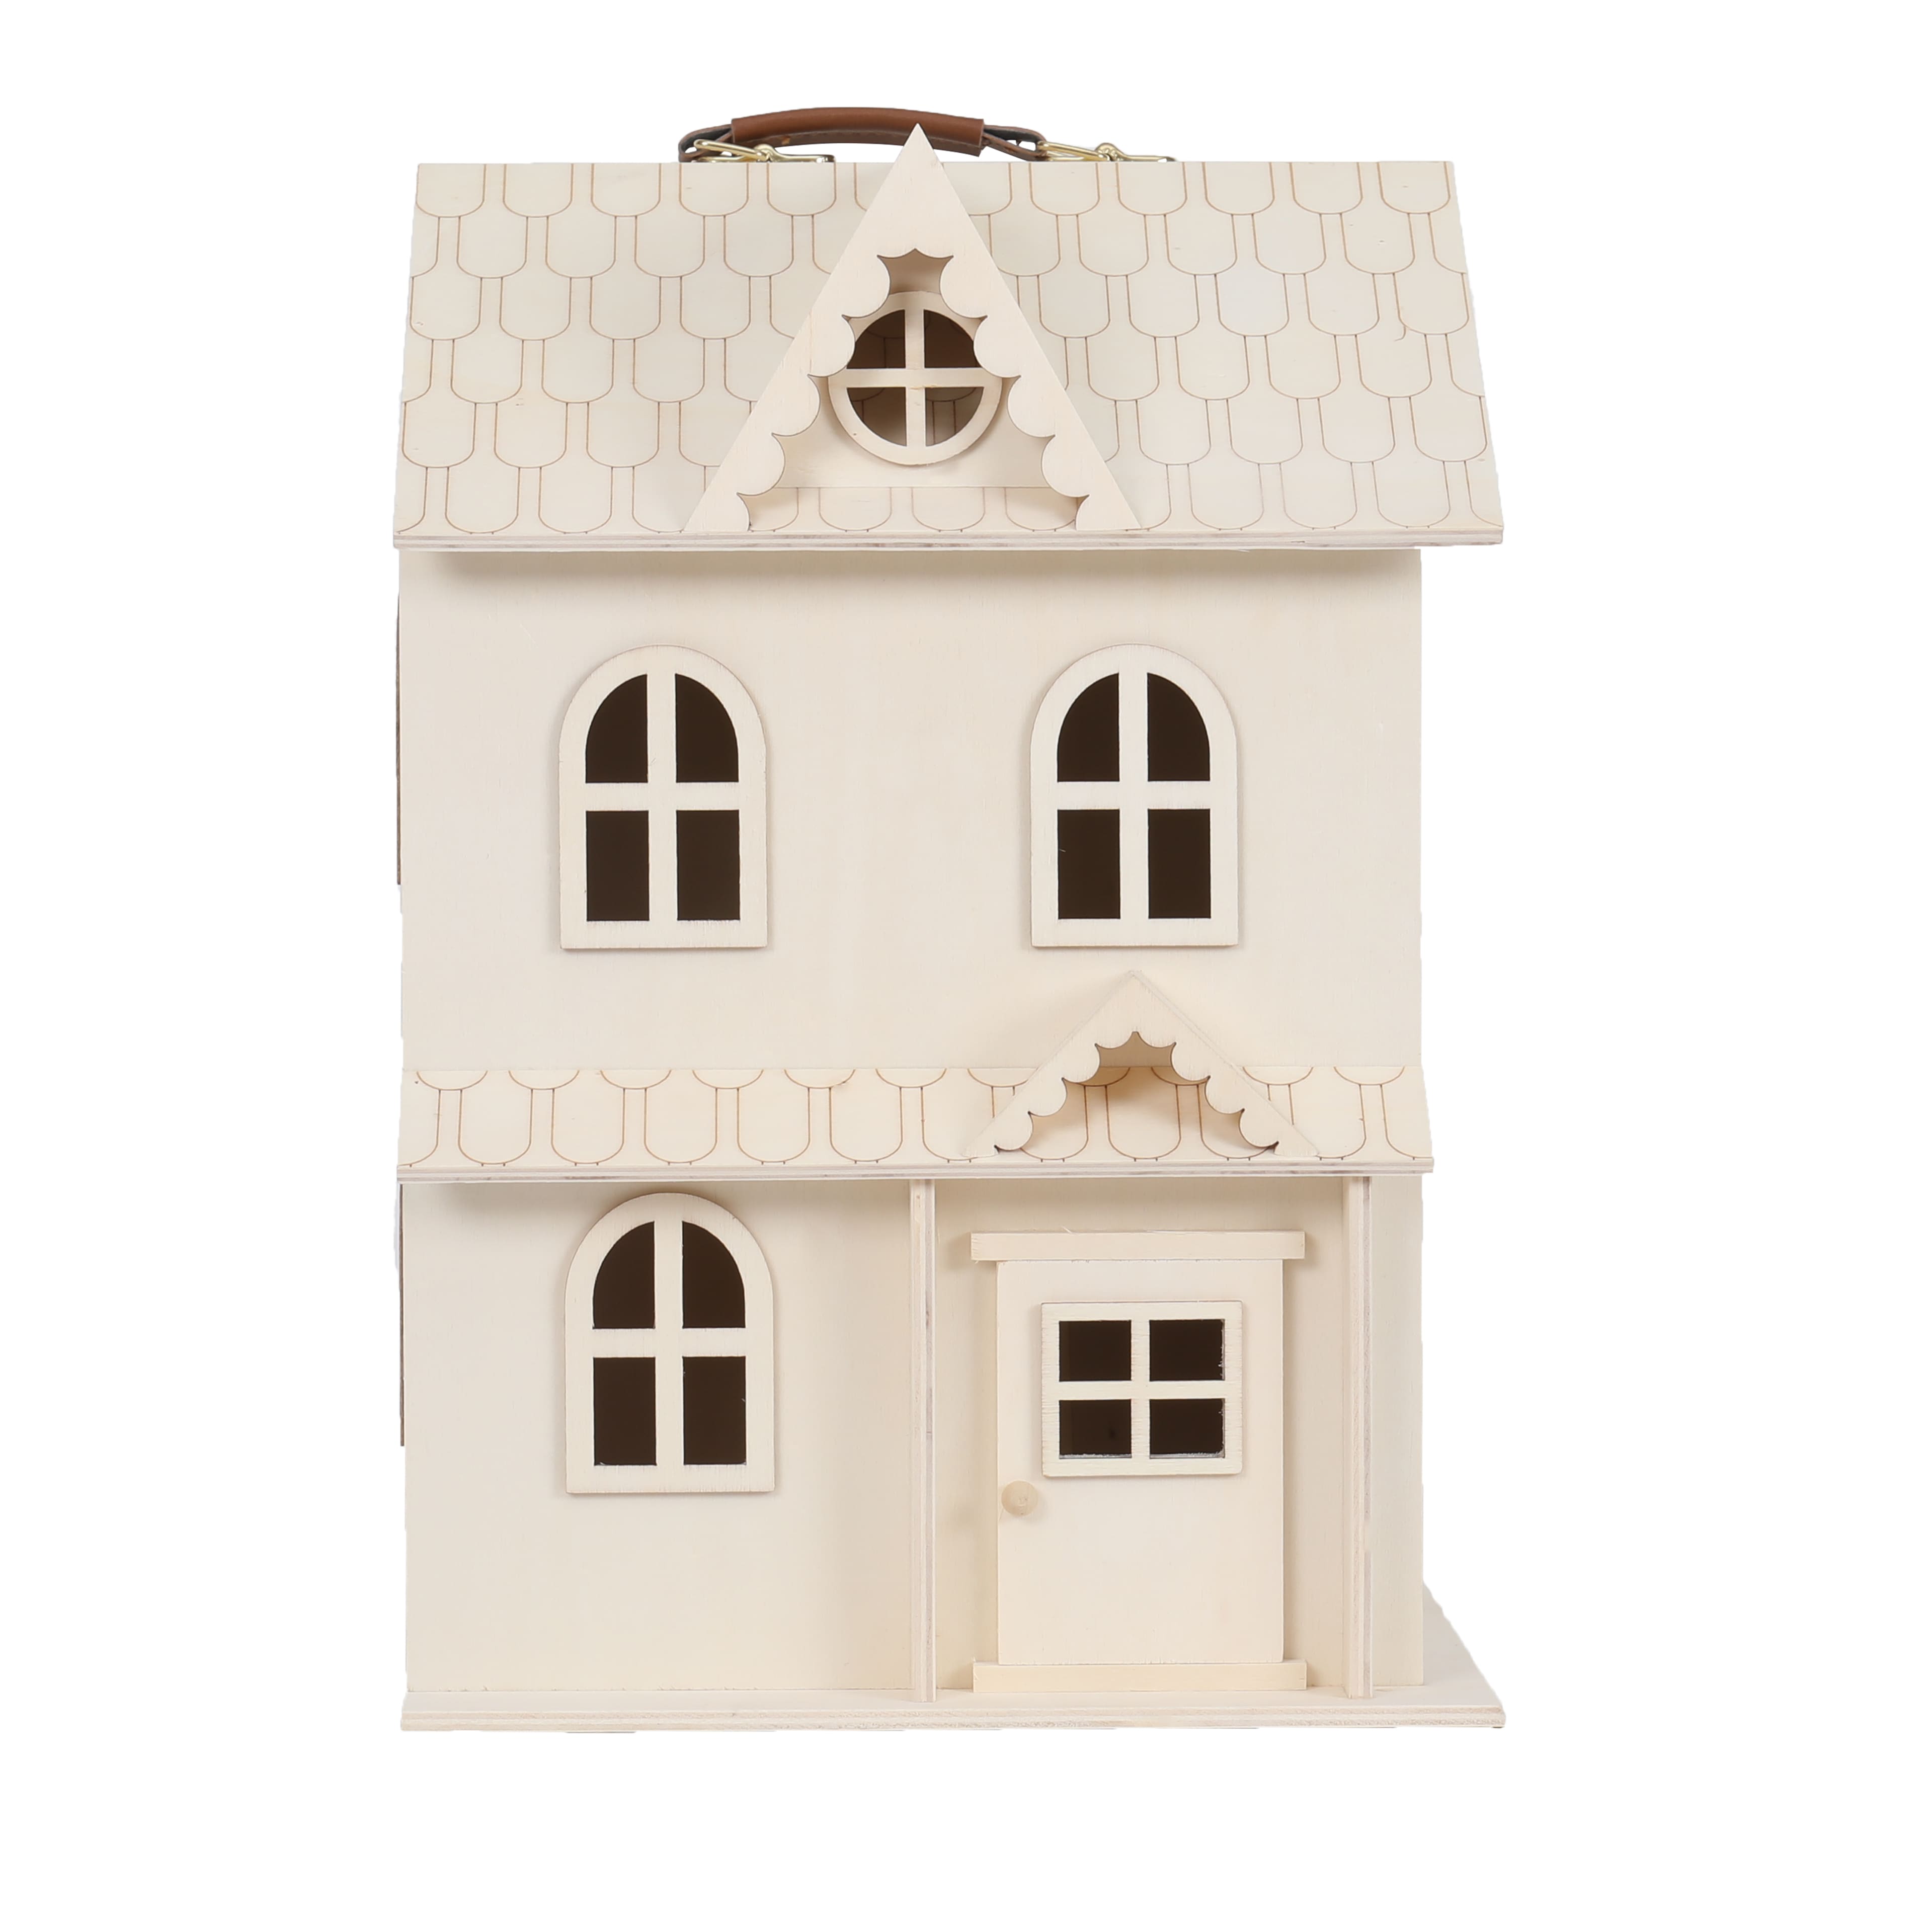 Dollhouse, House of Miniature - Maileg USA